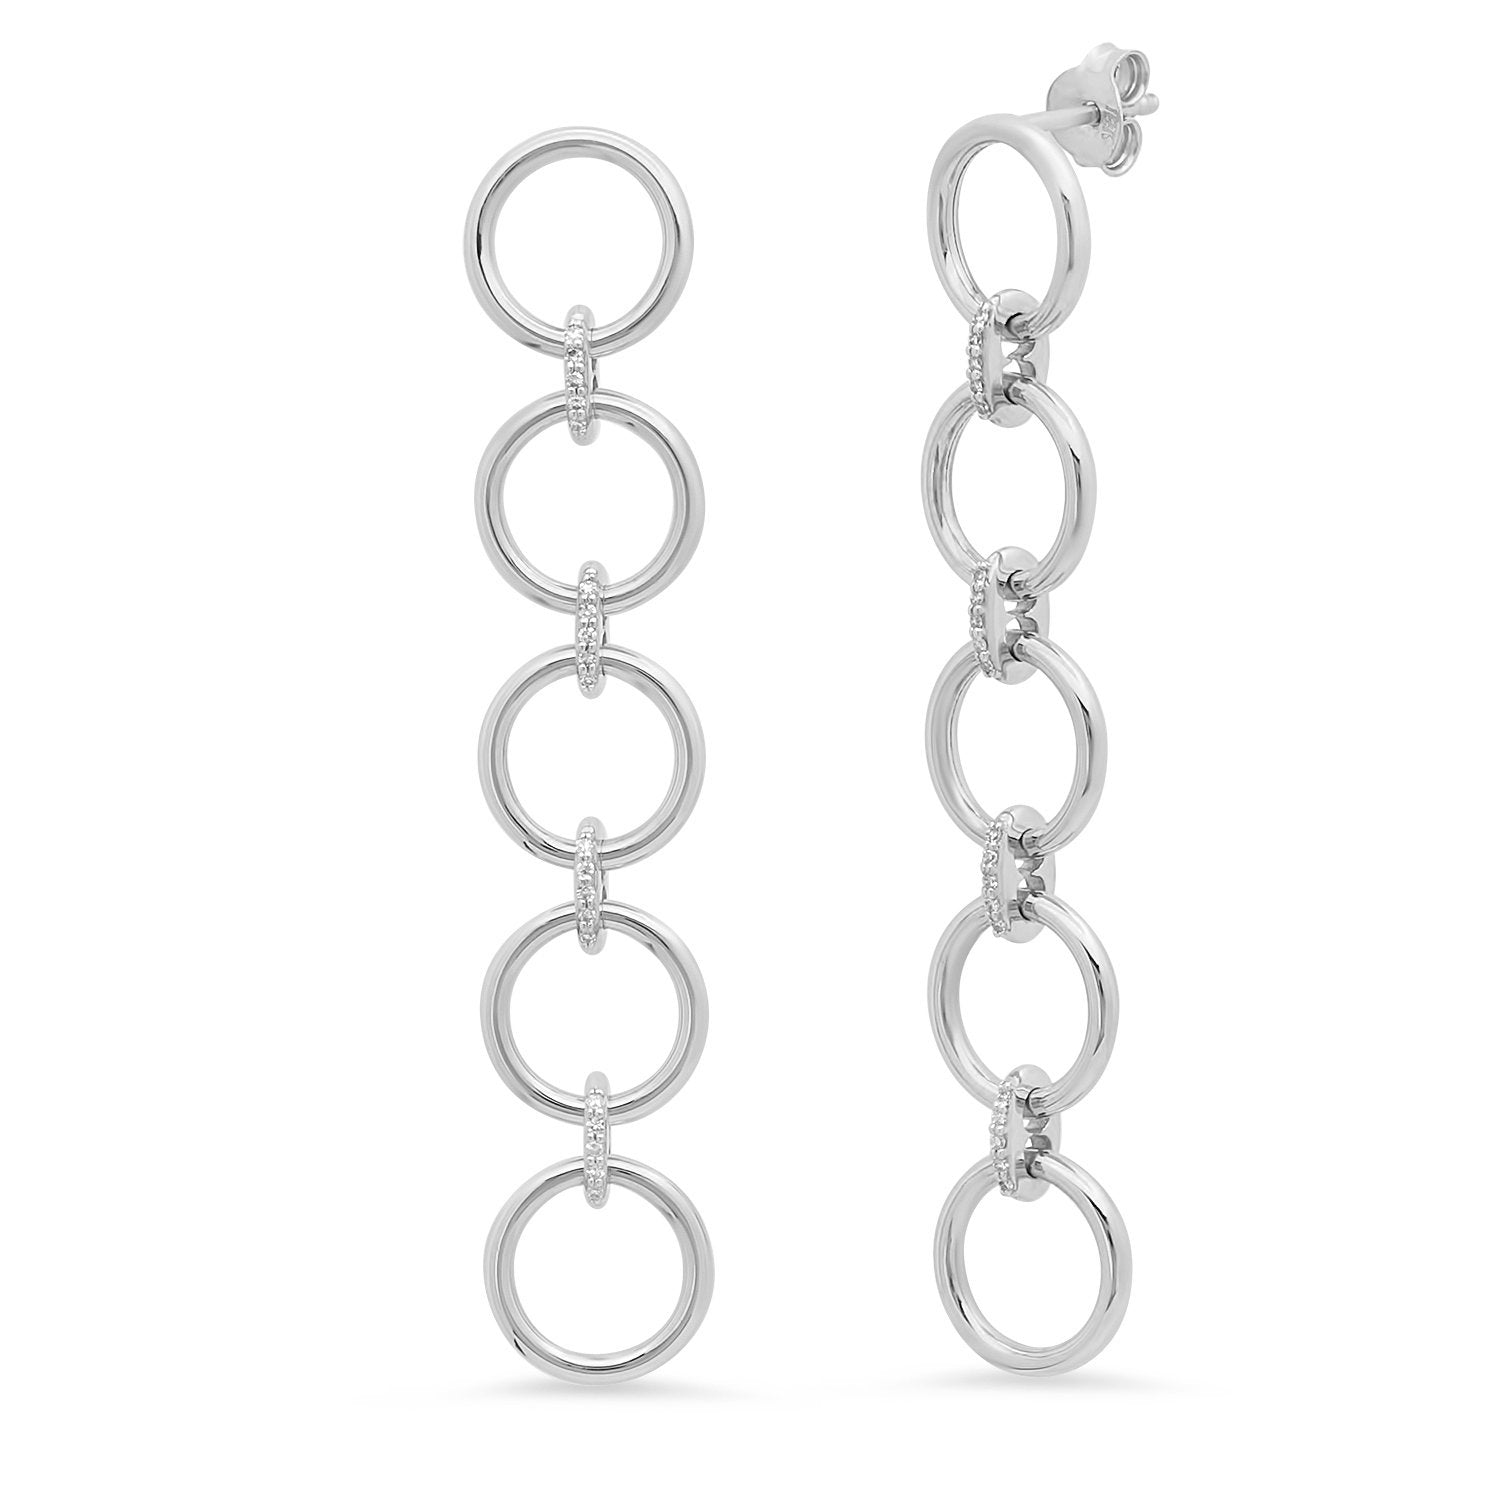 14K White Gold Five Loop Earrings with Diamond Links